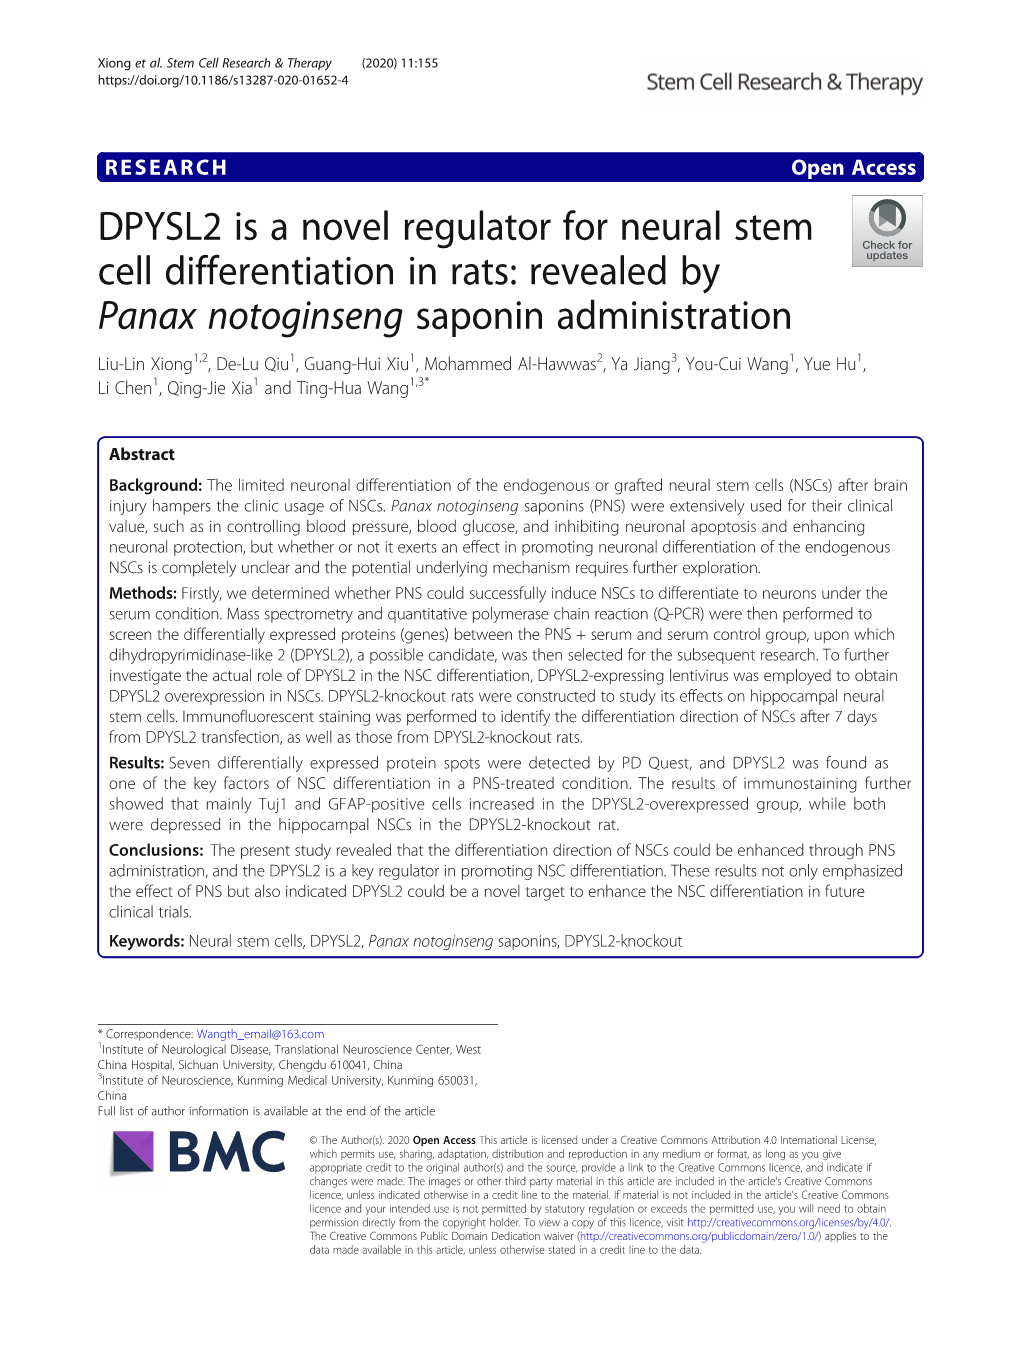 DPYSL2 Is a Novel Regulator for Neural Stem Cell Differentiation in Rats